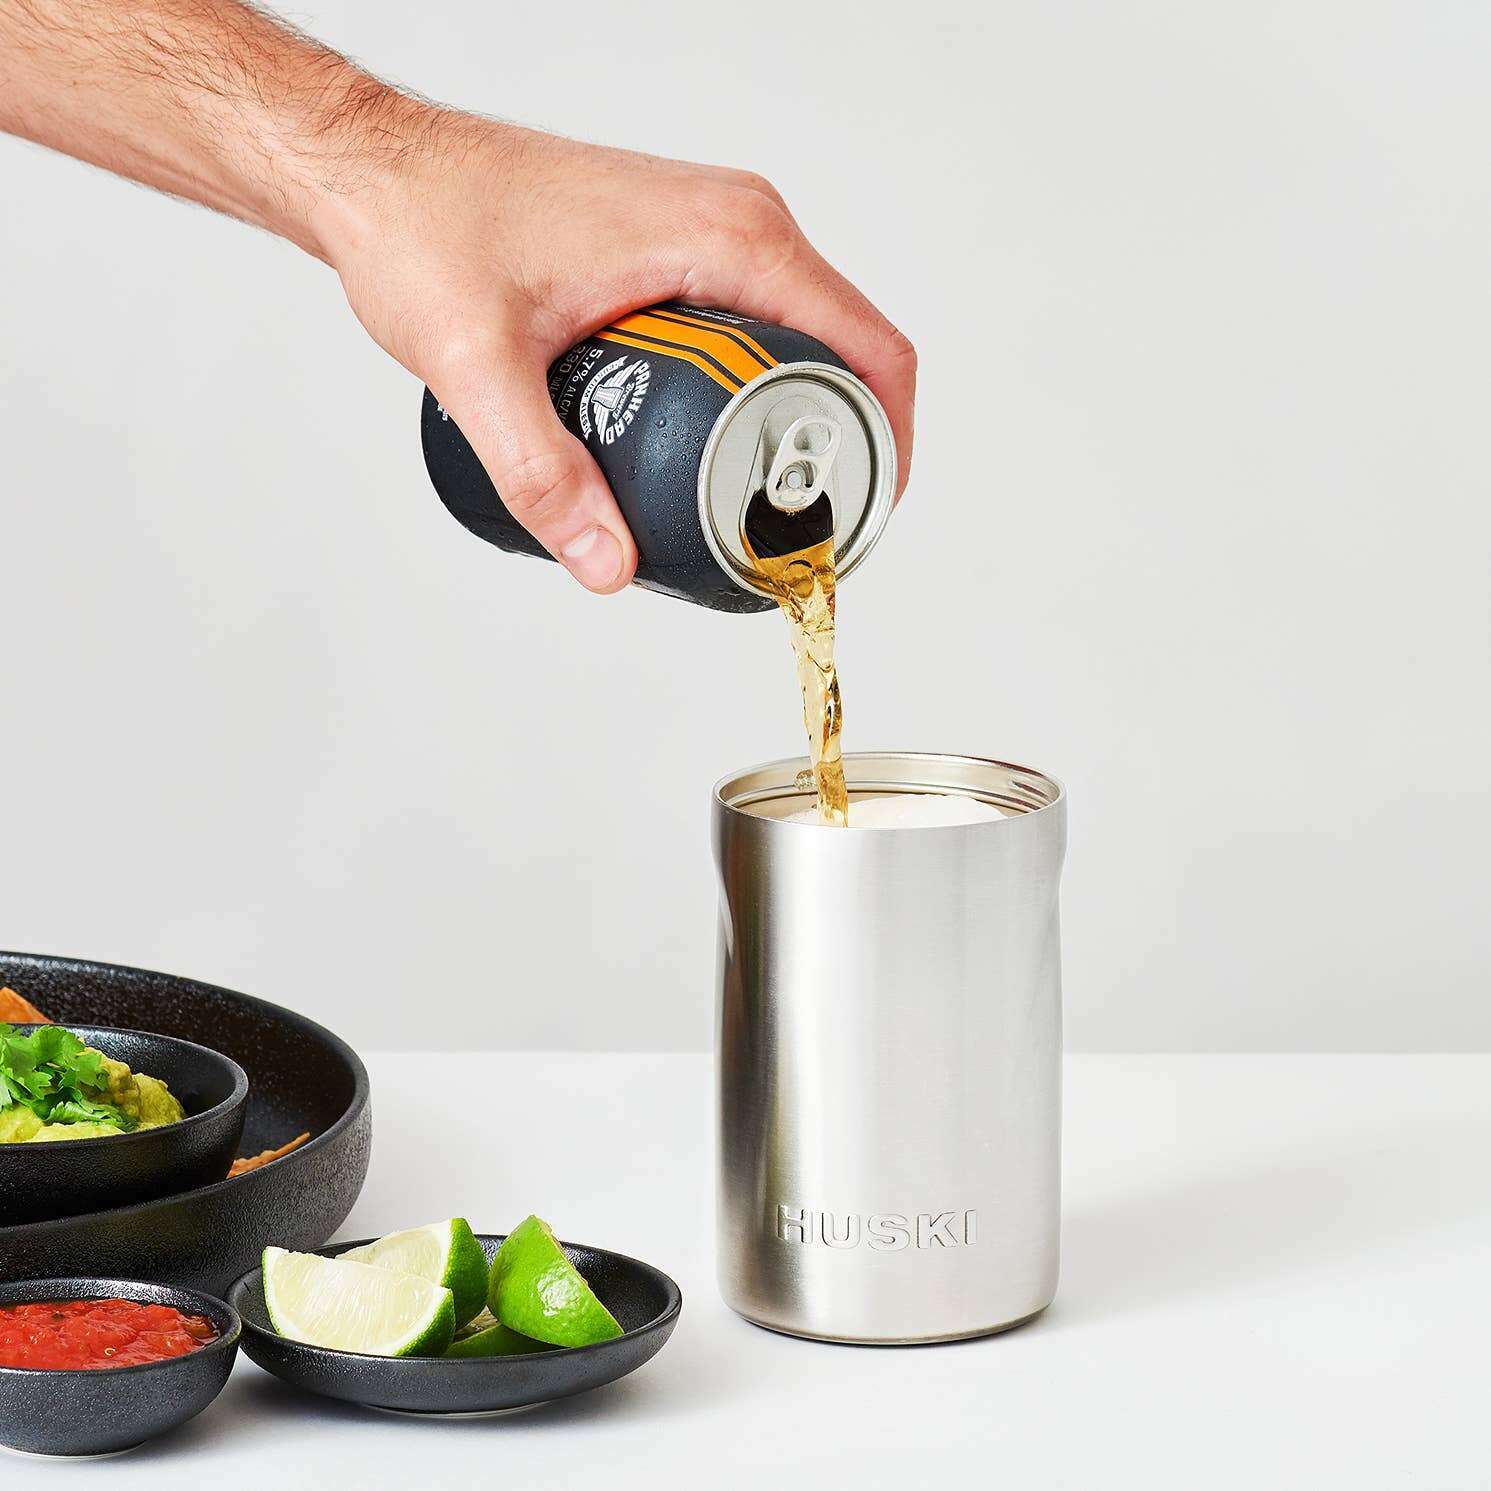 Impodimo Living & Giving:Huski Beer Cooler 2.0 - Stone Grey:Huski